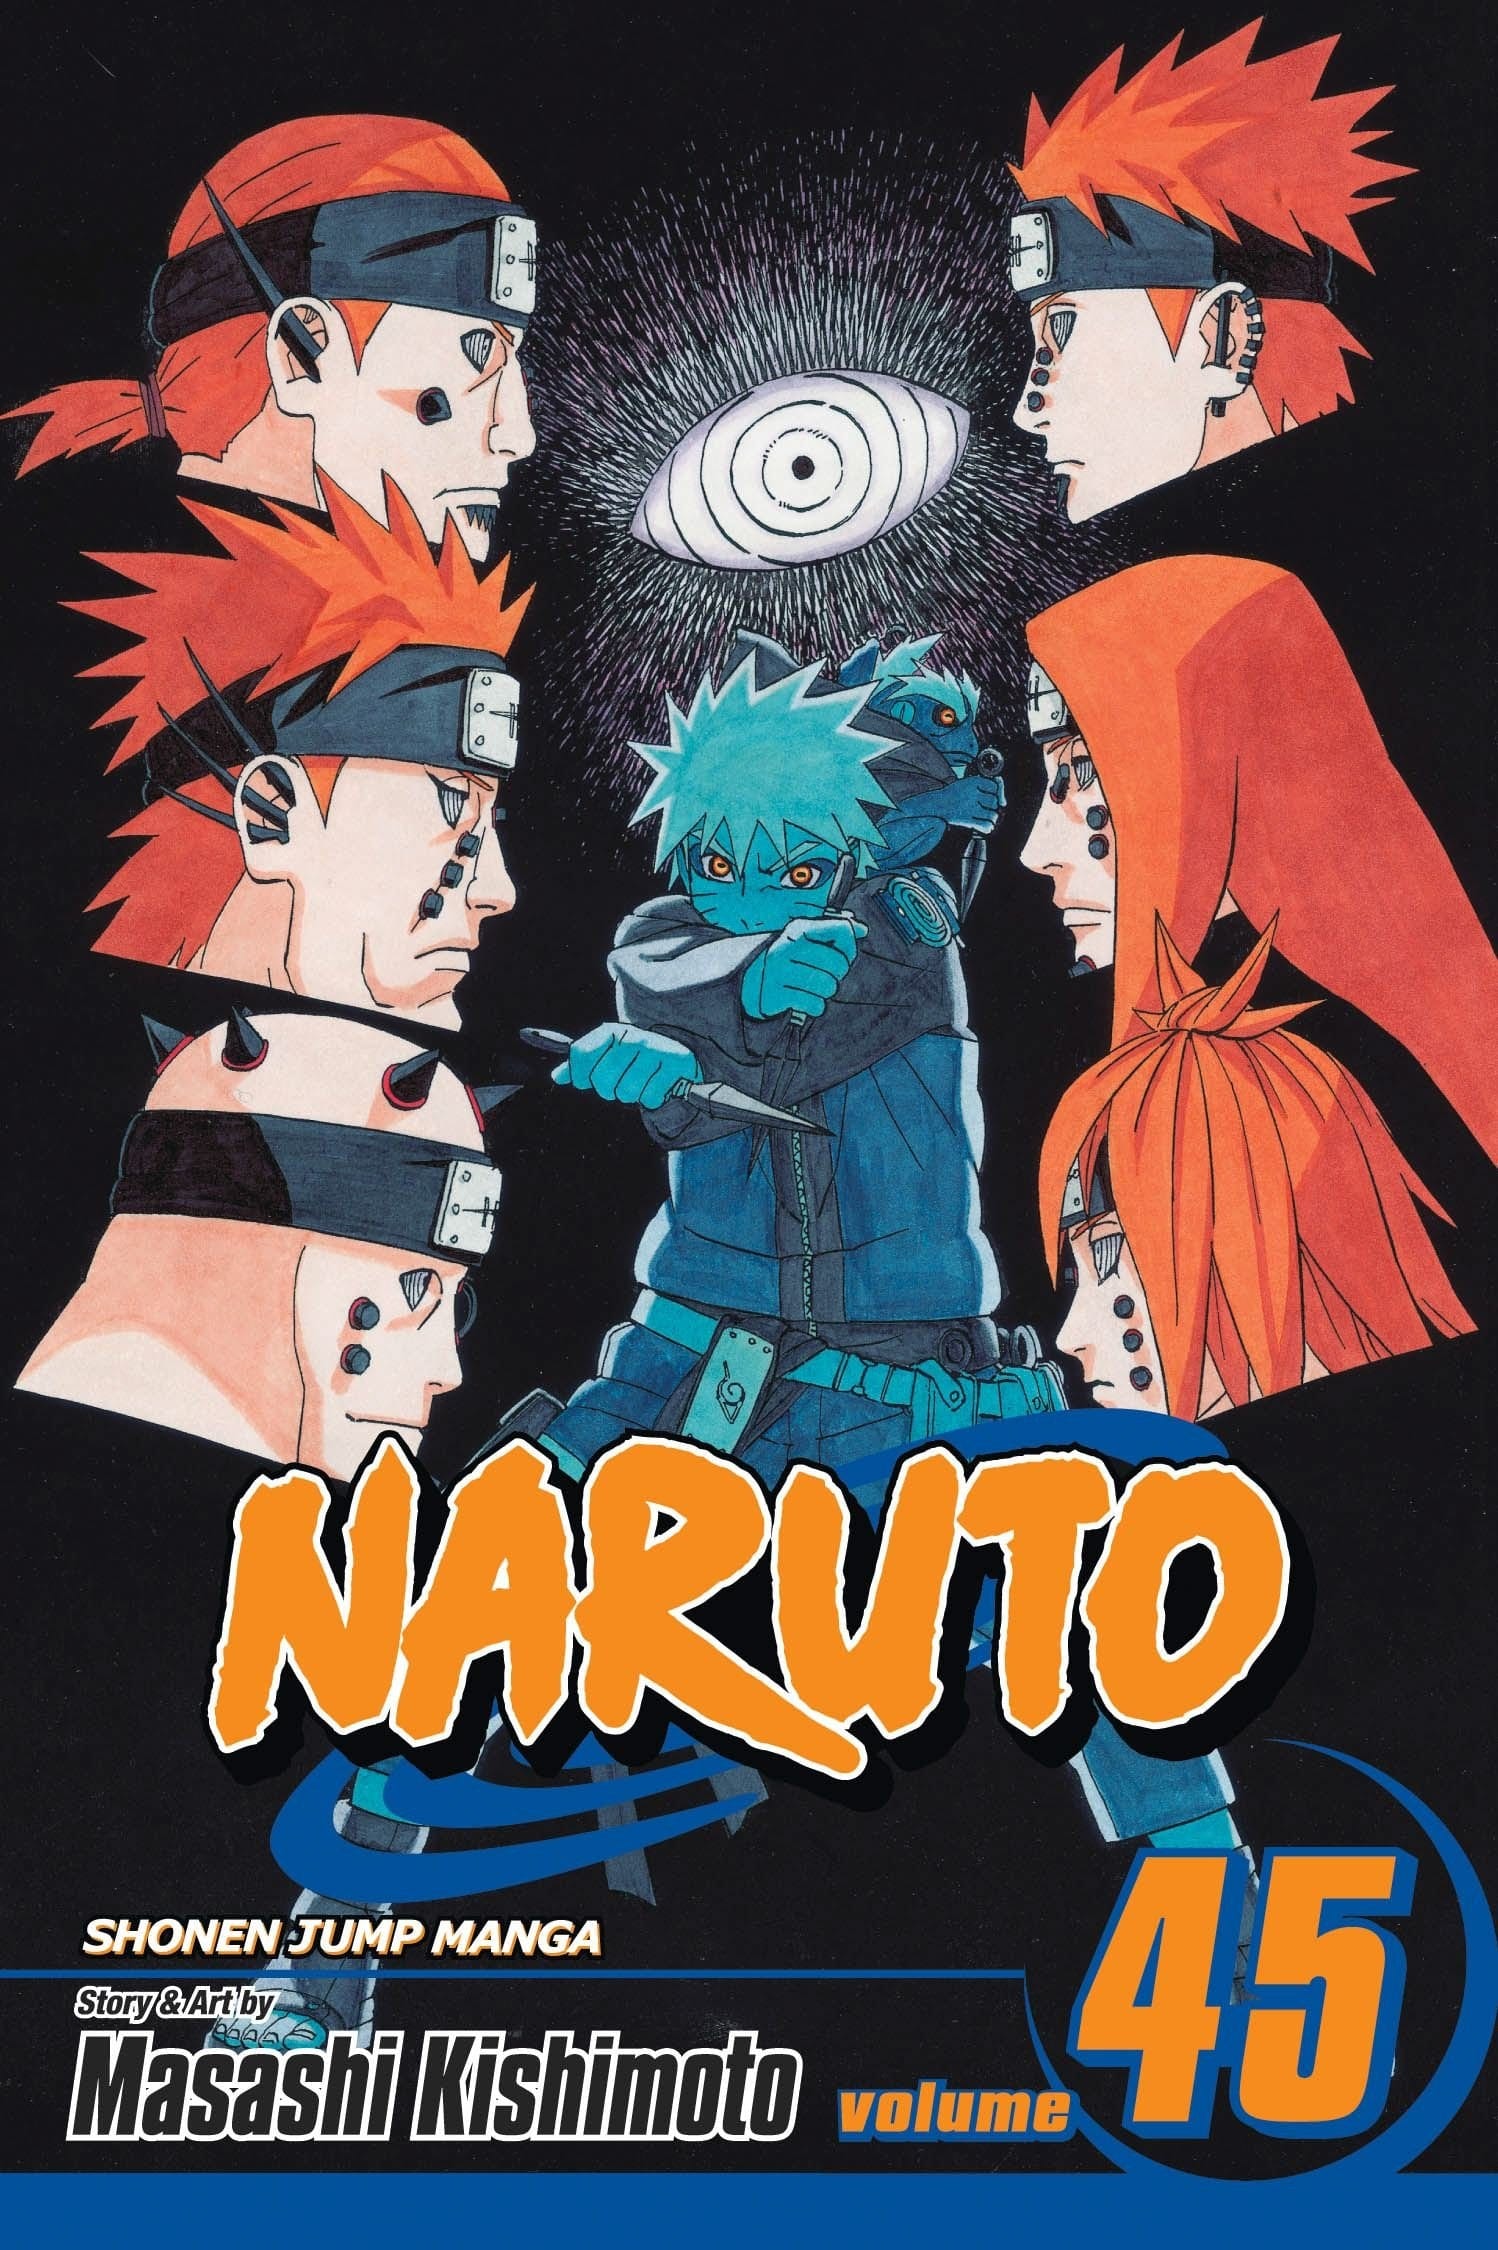 Naruto Vol. 45: Battlefield Konoha - Third Eye